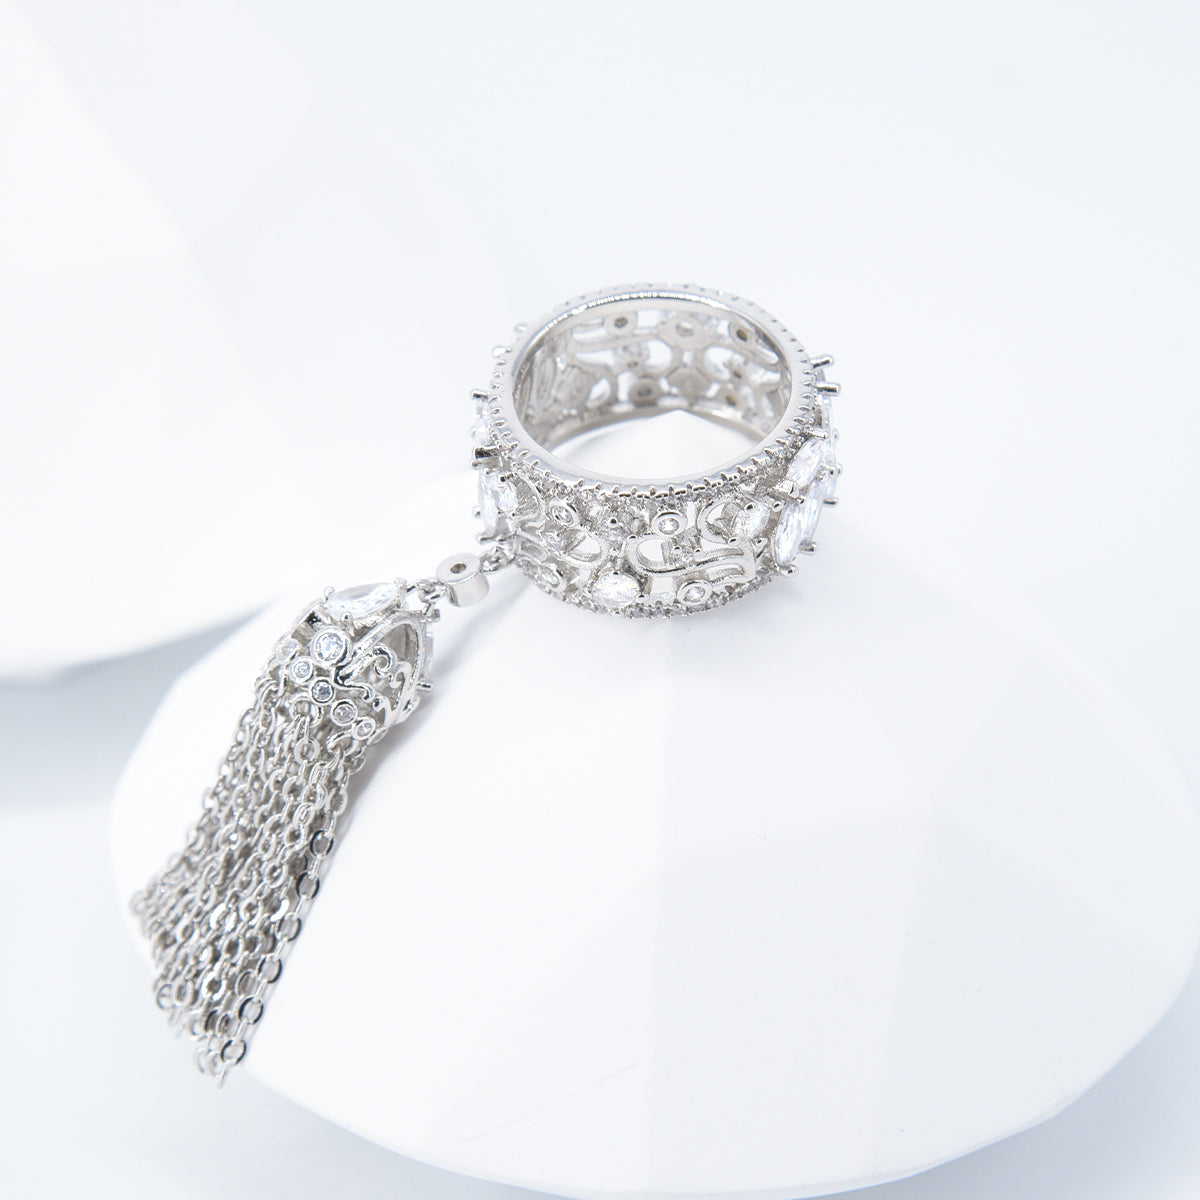 Elegant ring with long pendant